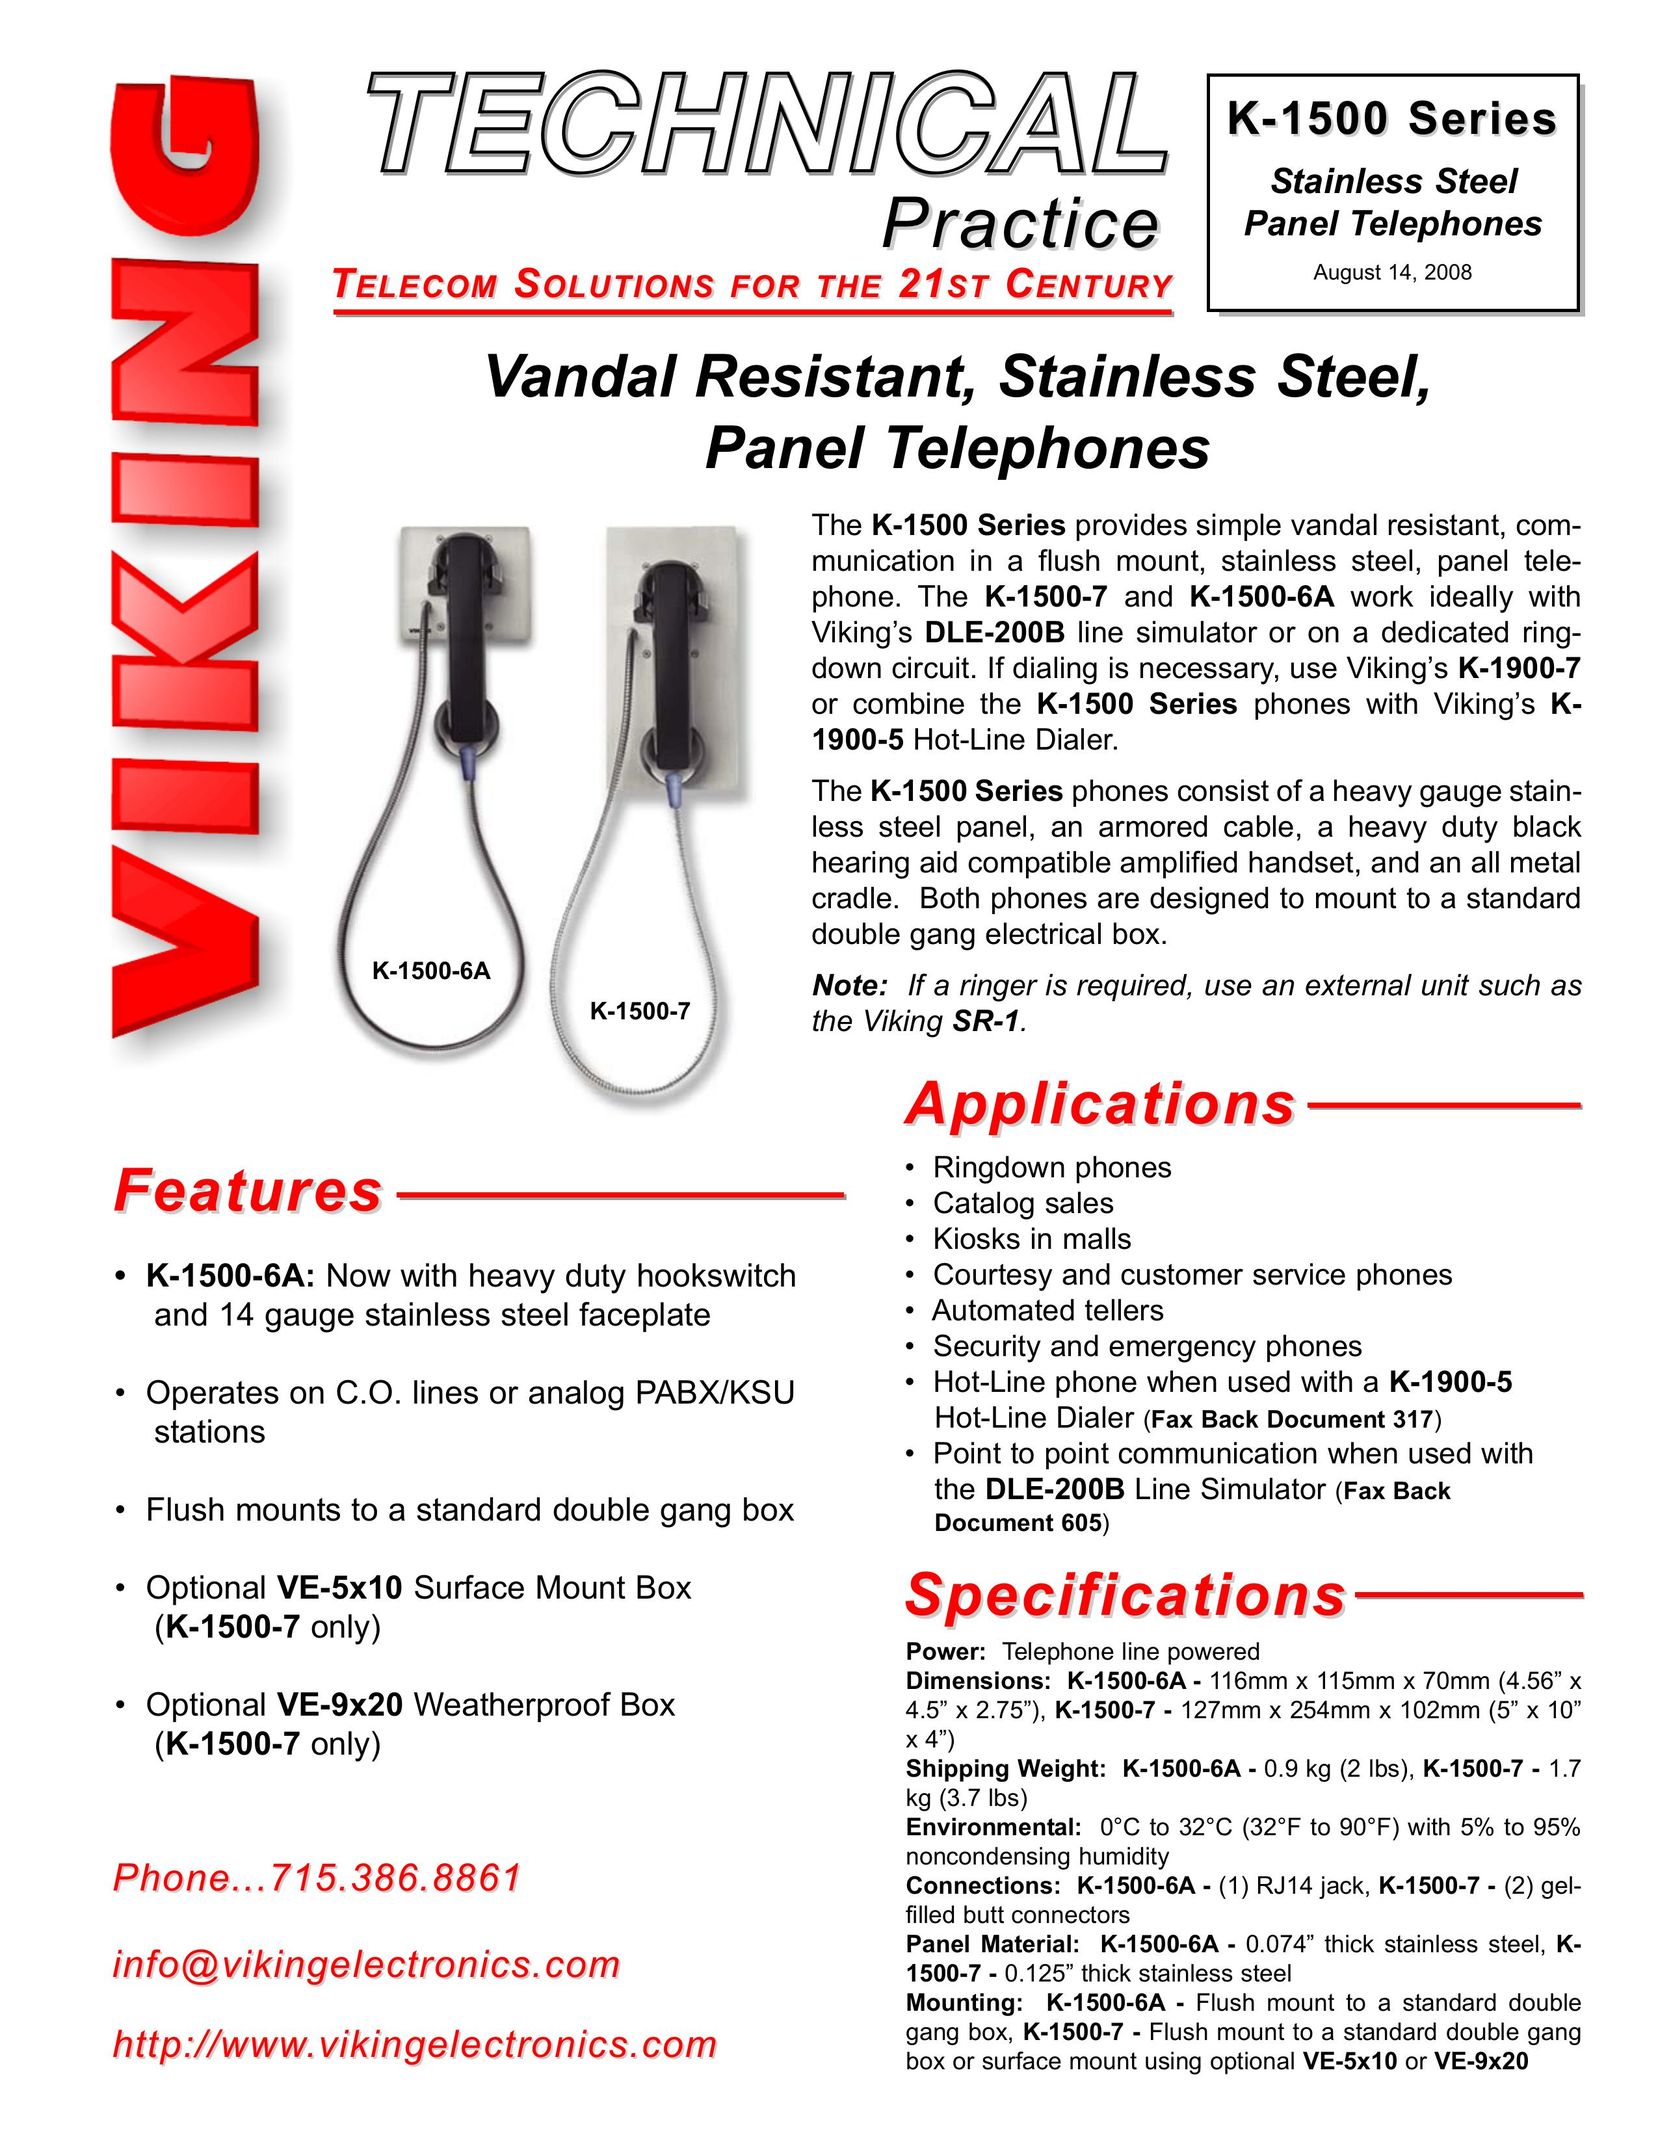 Viking Electronics K-1500 Series Telephone User Manual